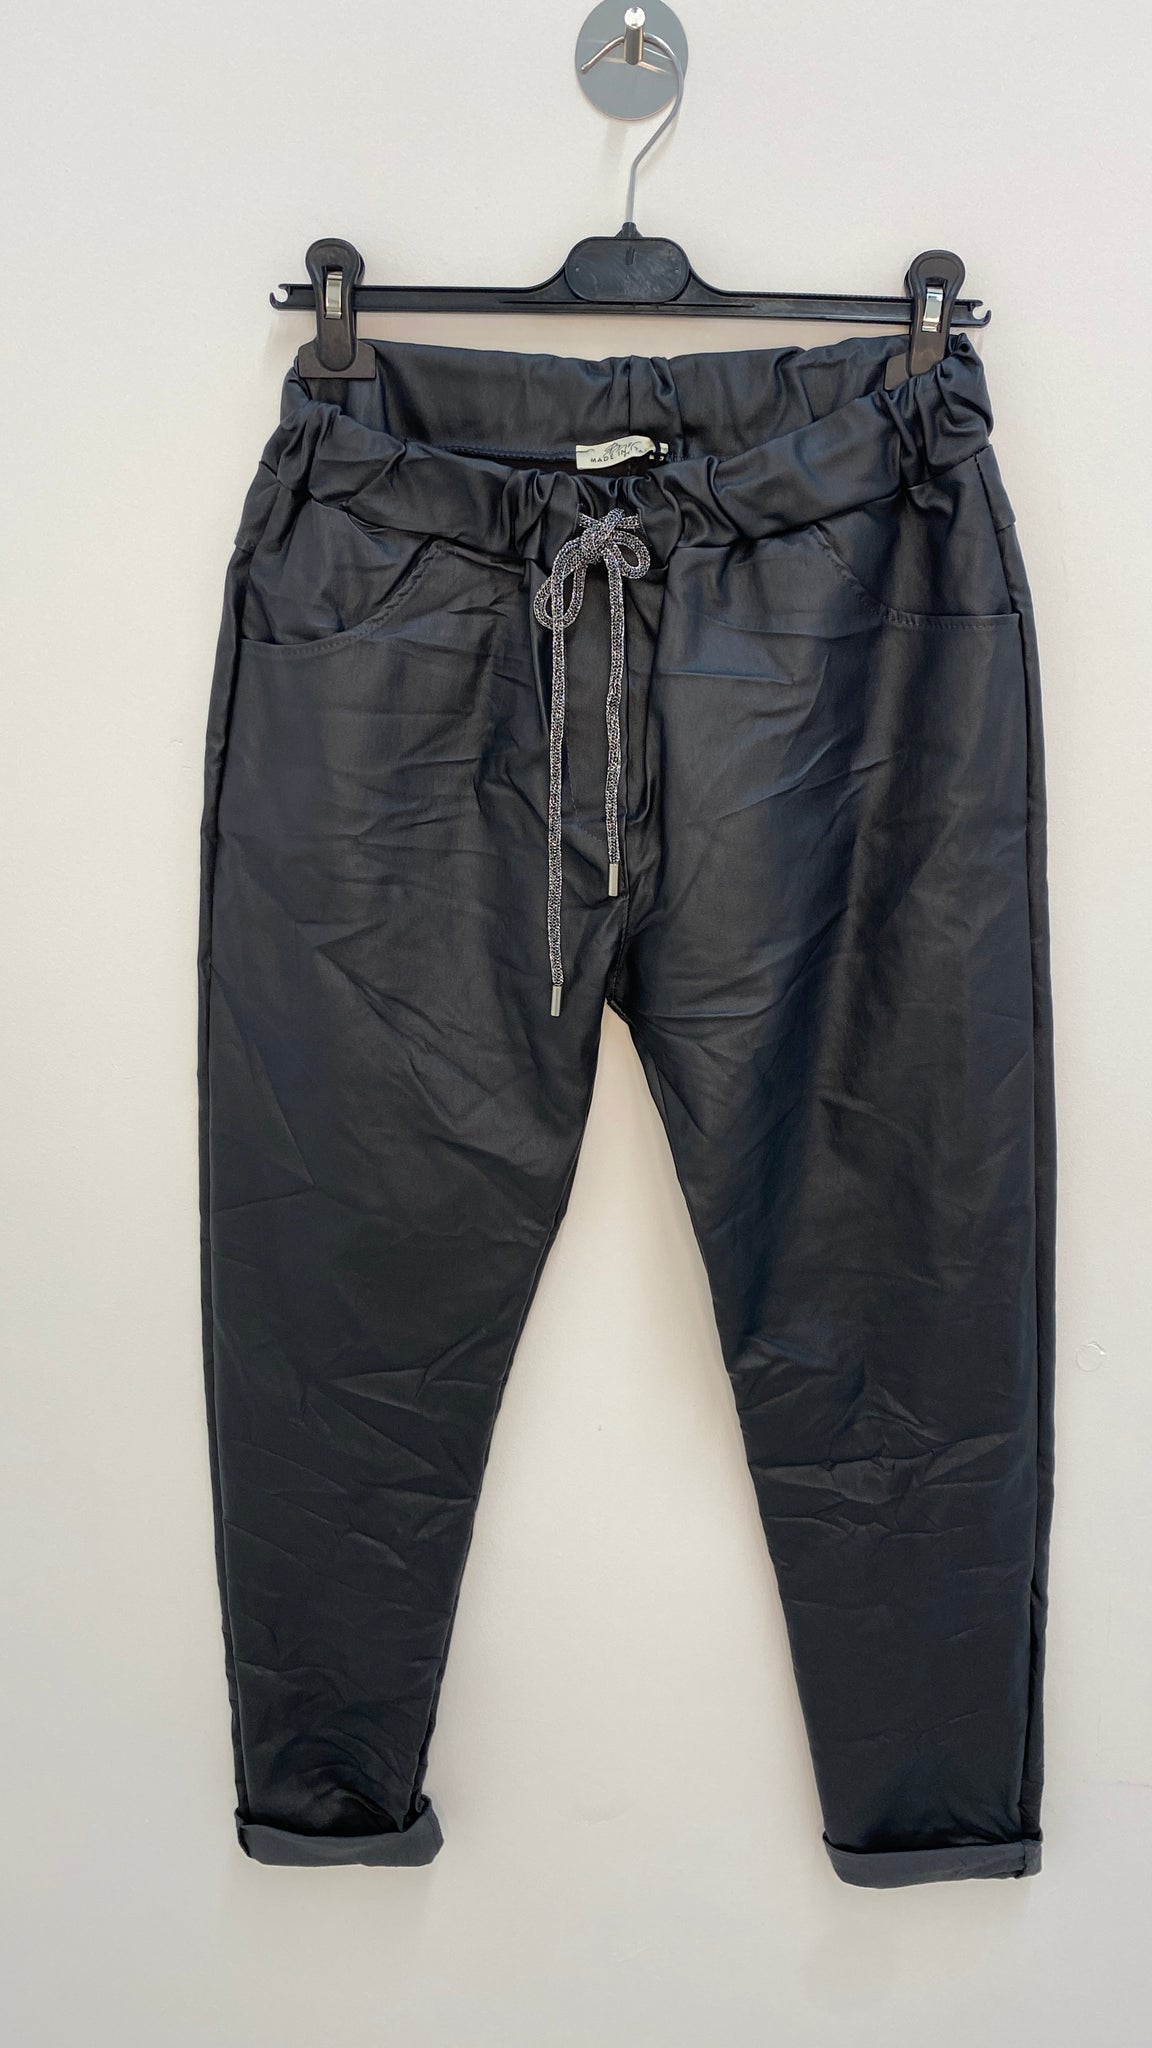 Lisbon Magic Pleather Pants (Leather Look) -  Charcoal Grey